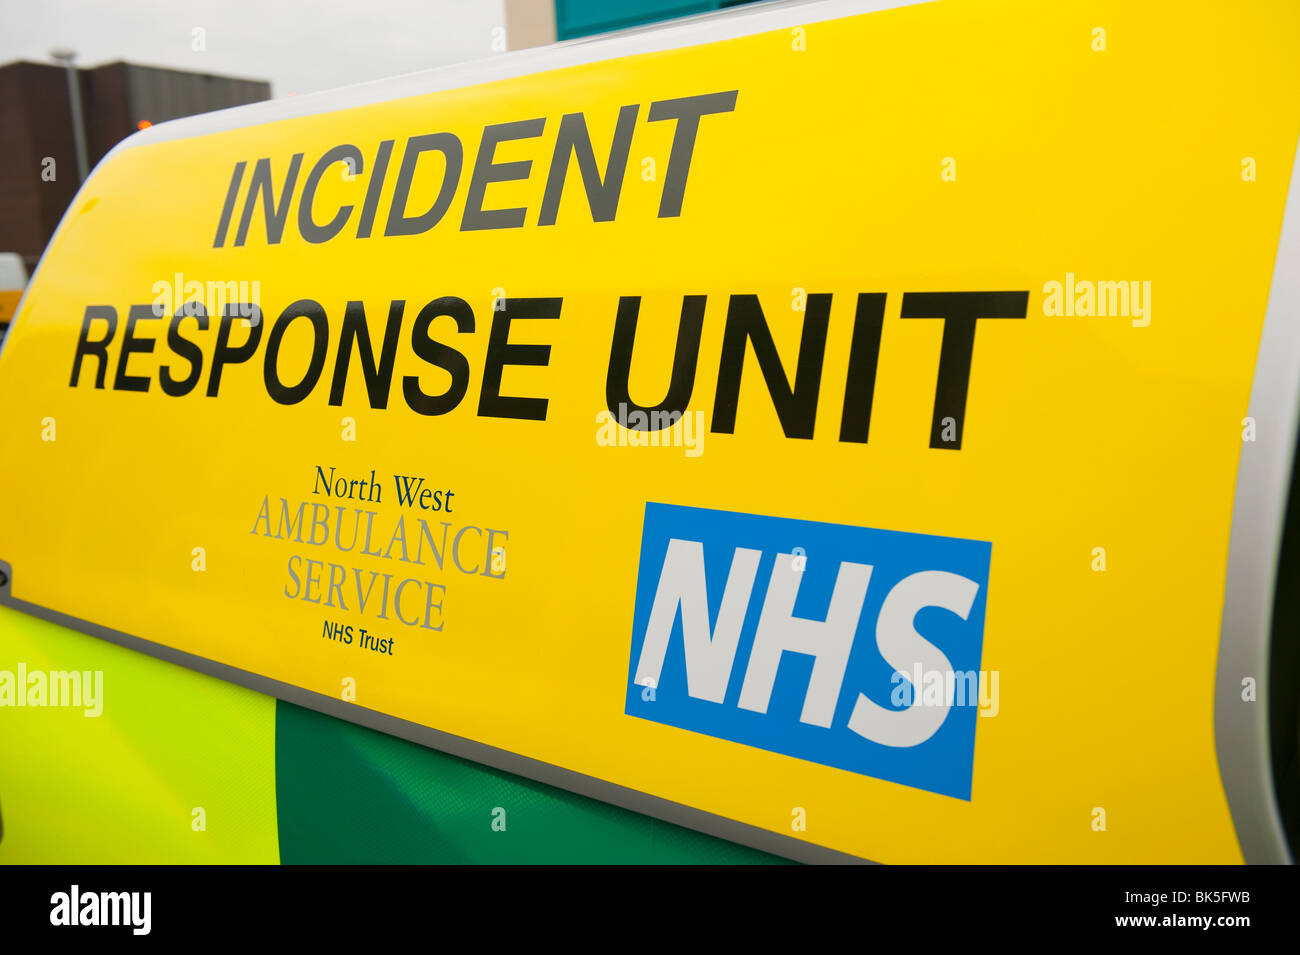 NHS Krankenwagen Incident Response Unit Stockfoto